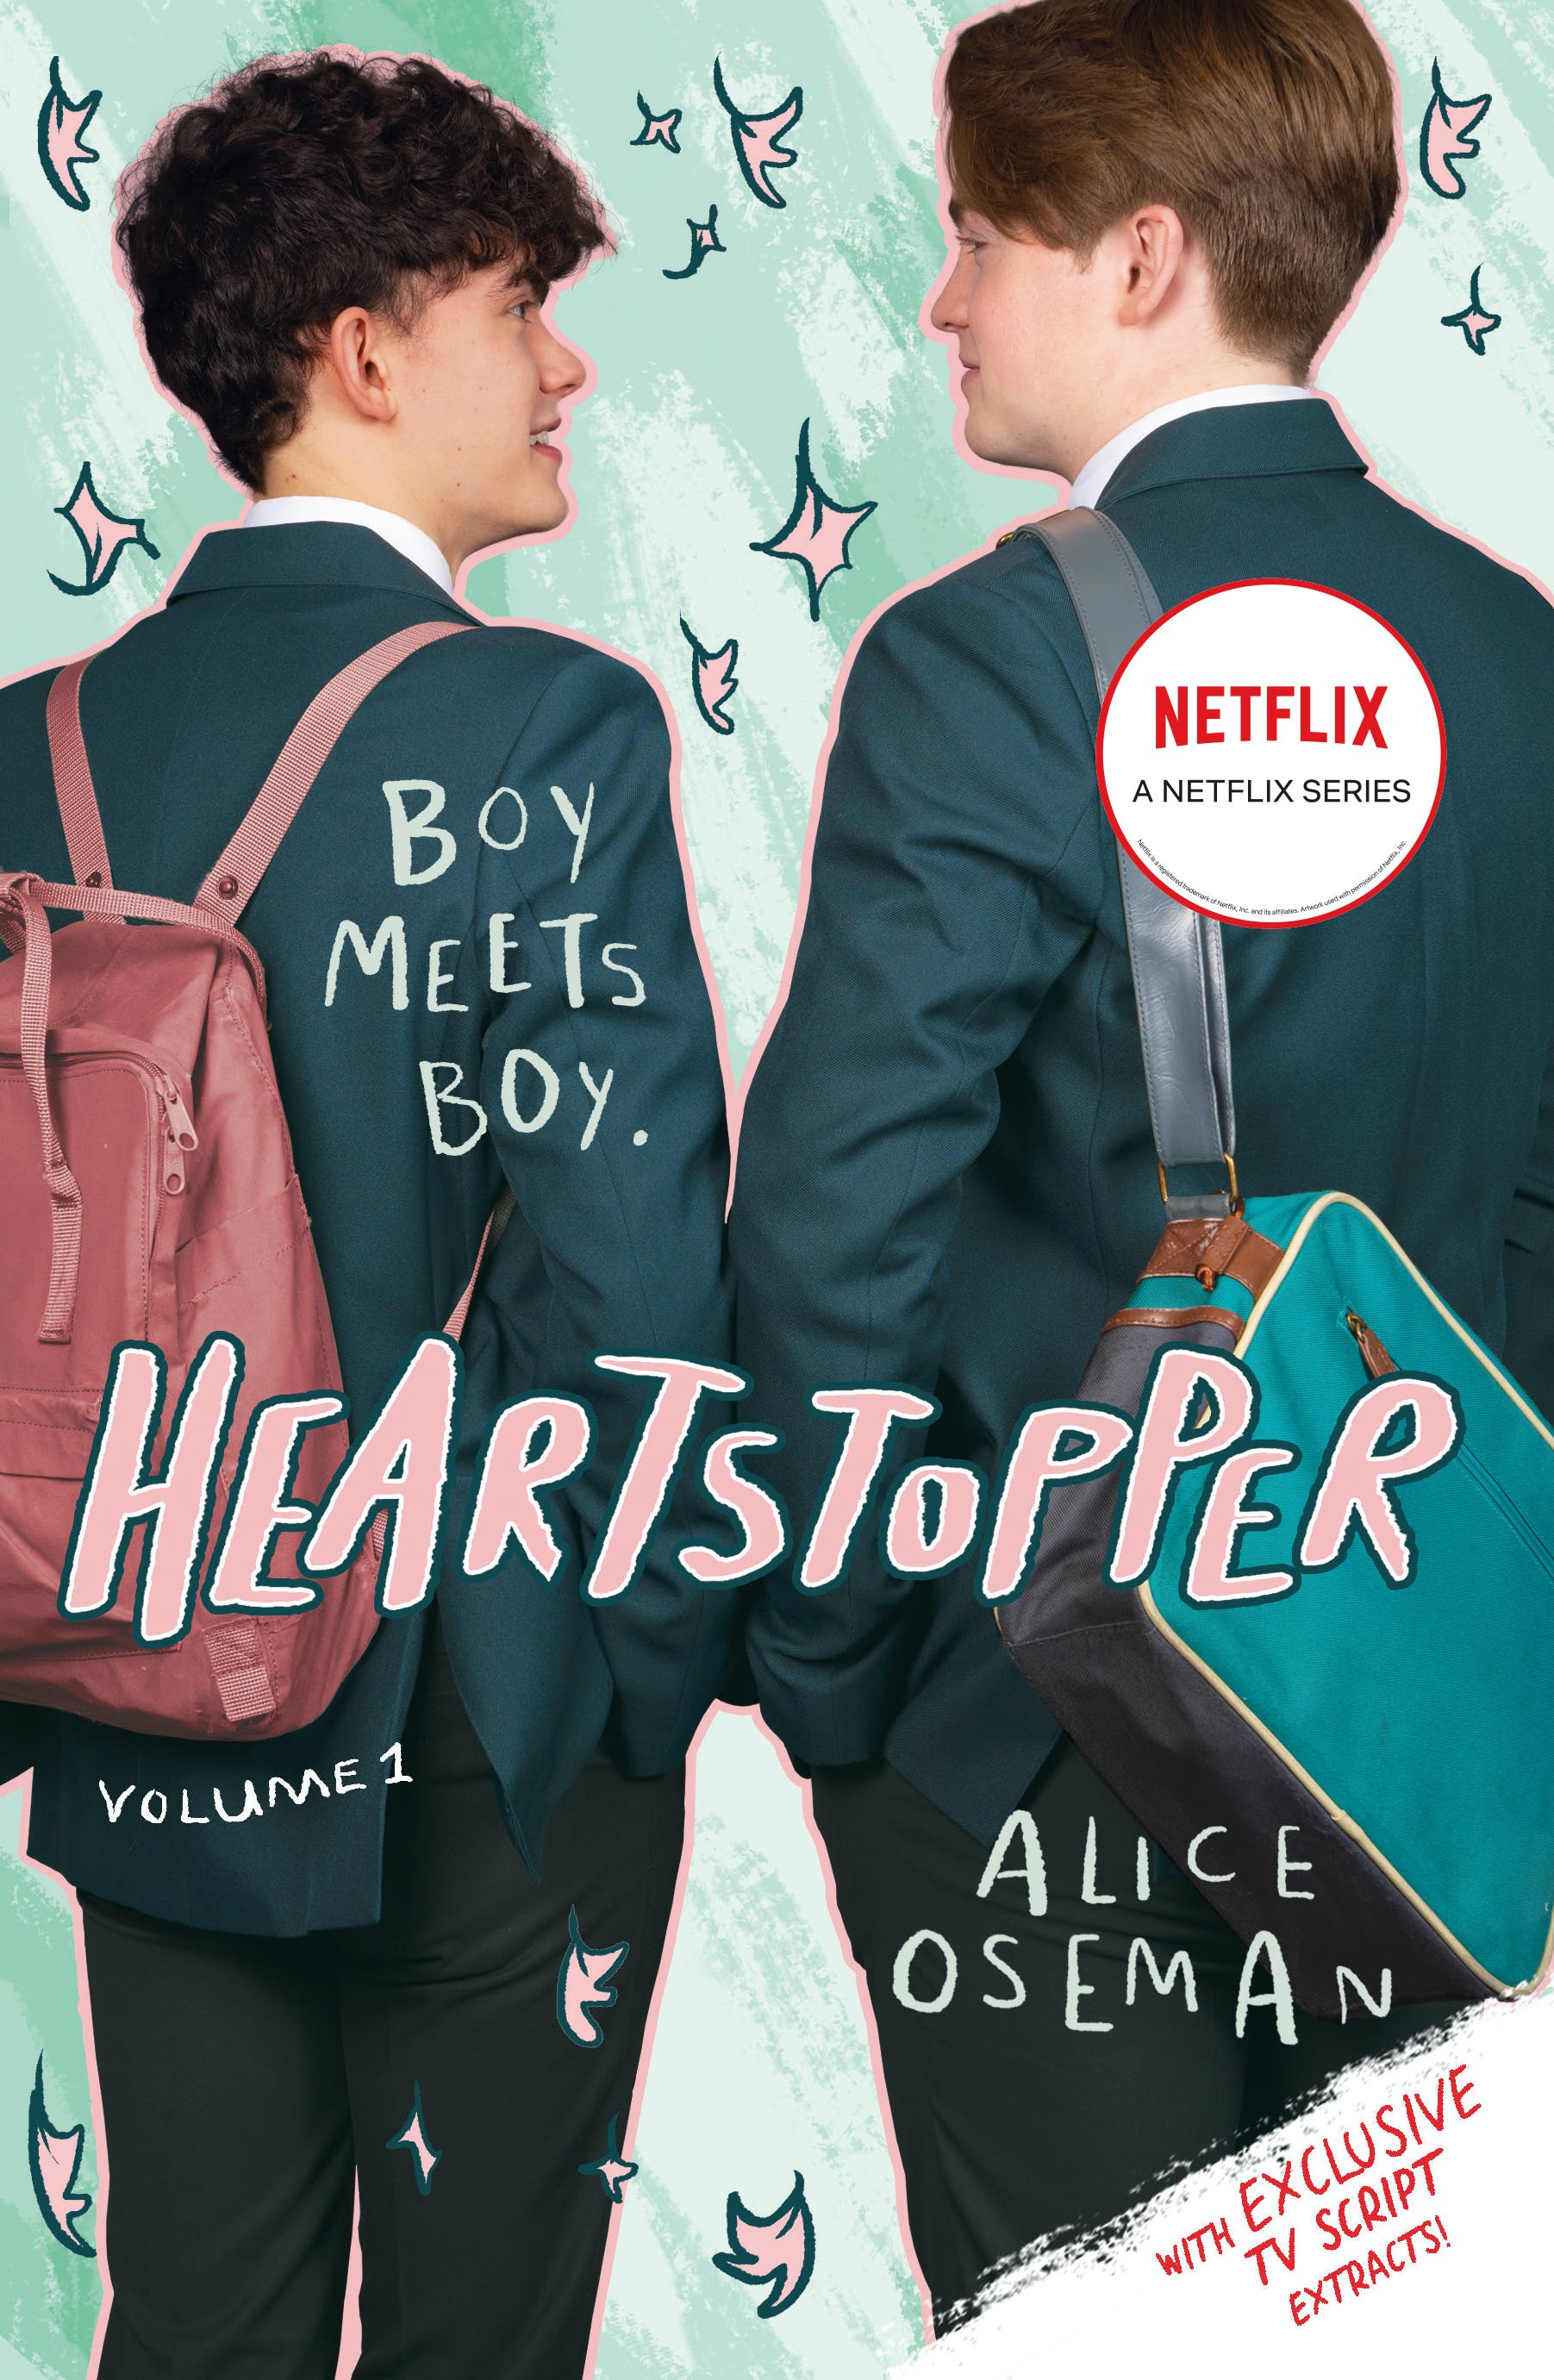 Heartstopper Volume 1: The Million Copy Bestselling Series, Now On Netflix! By Alice Oseman